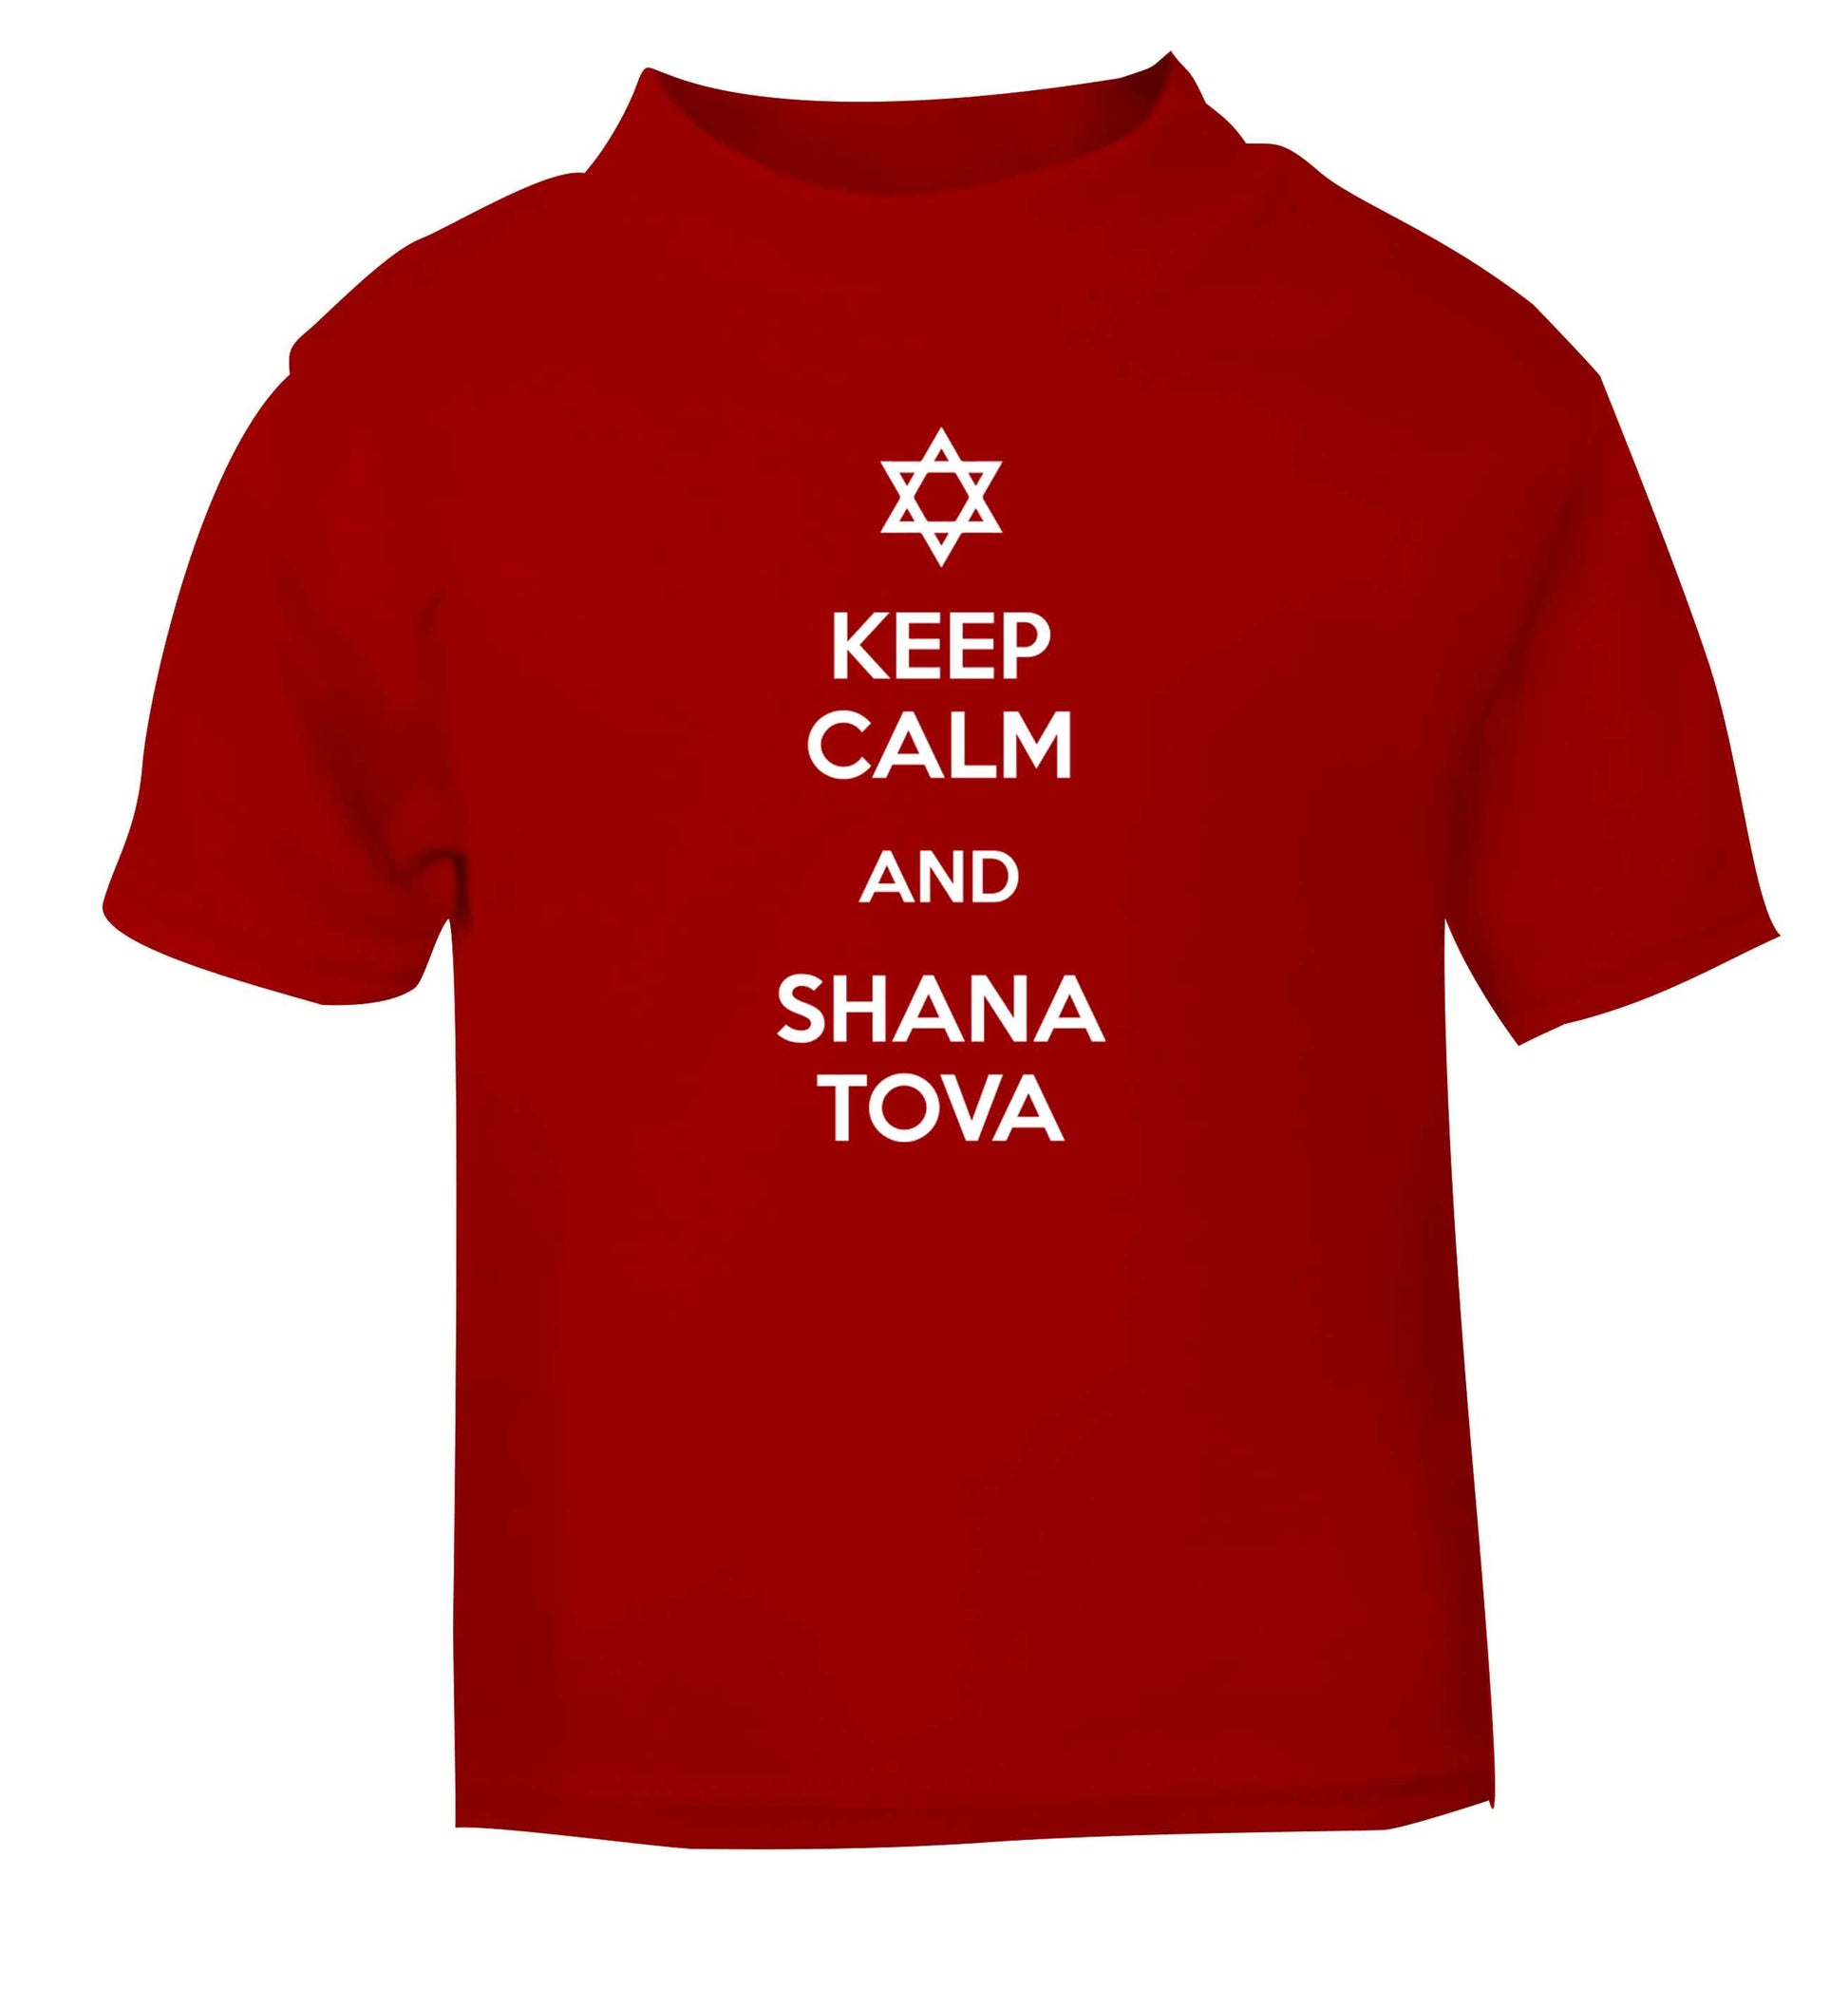 Keep calm and shana tova red Baby Toddler Tshirt 2 Years